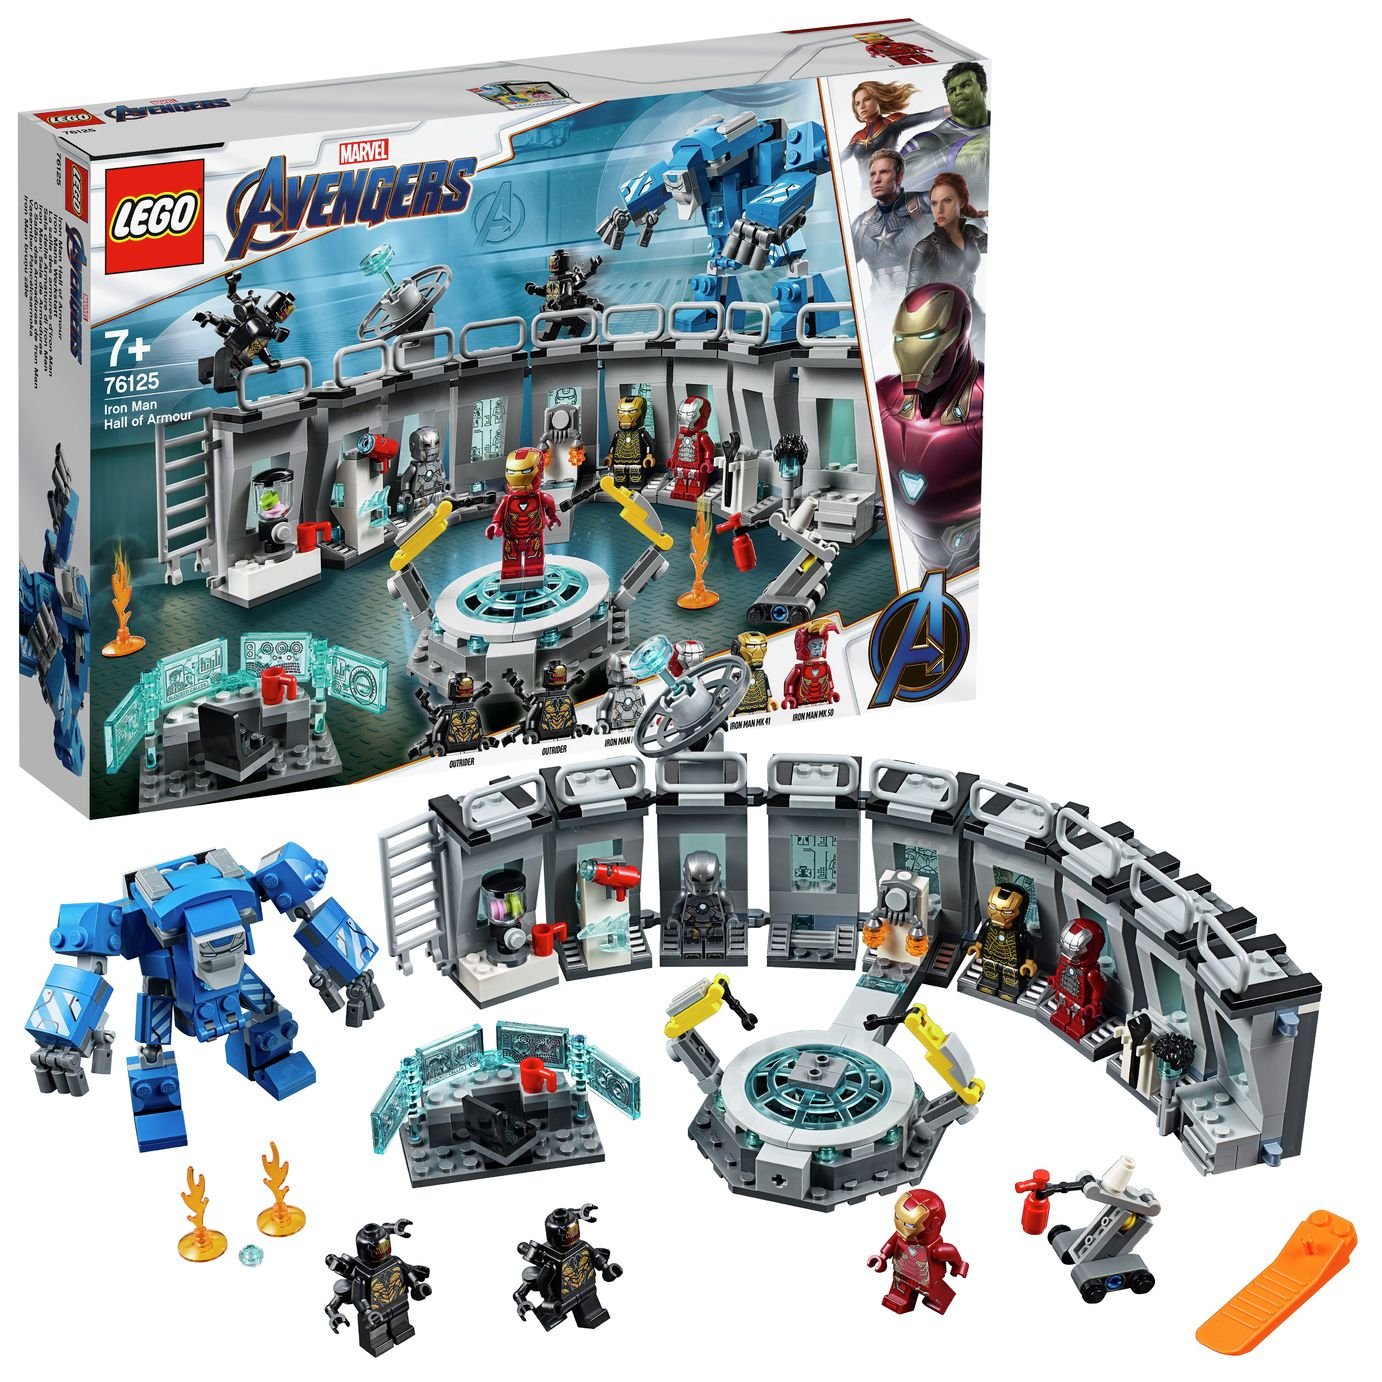 LEGO Marvel Avengers Iron Man Hall of Armor Lab Set - 76125